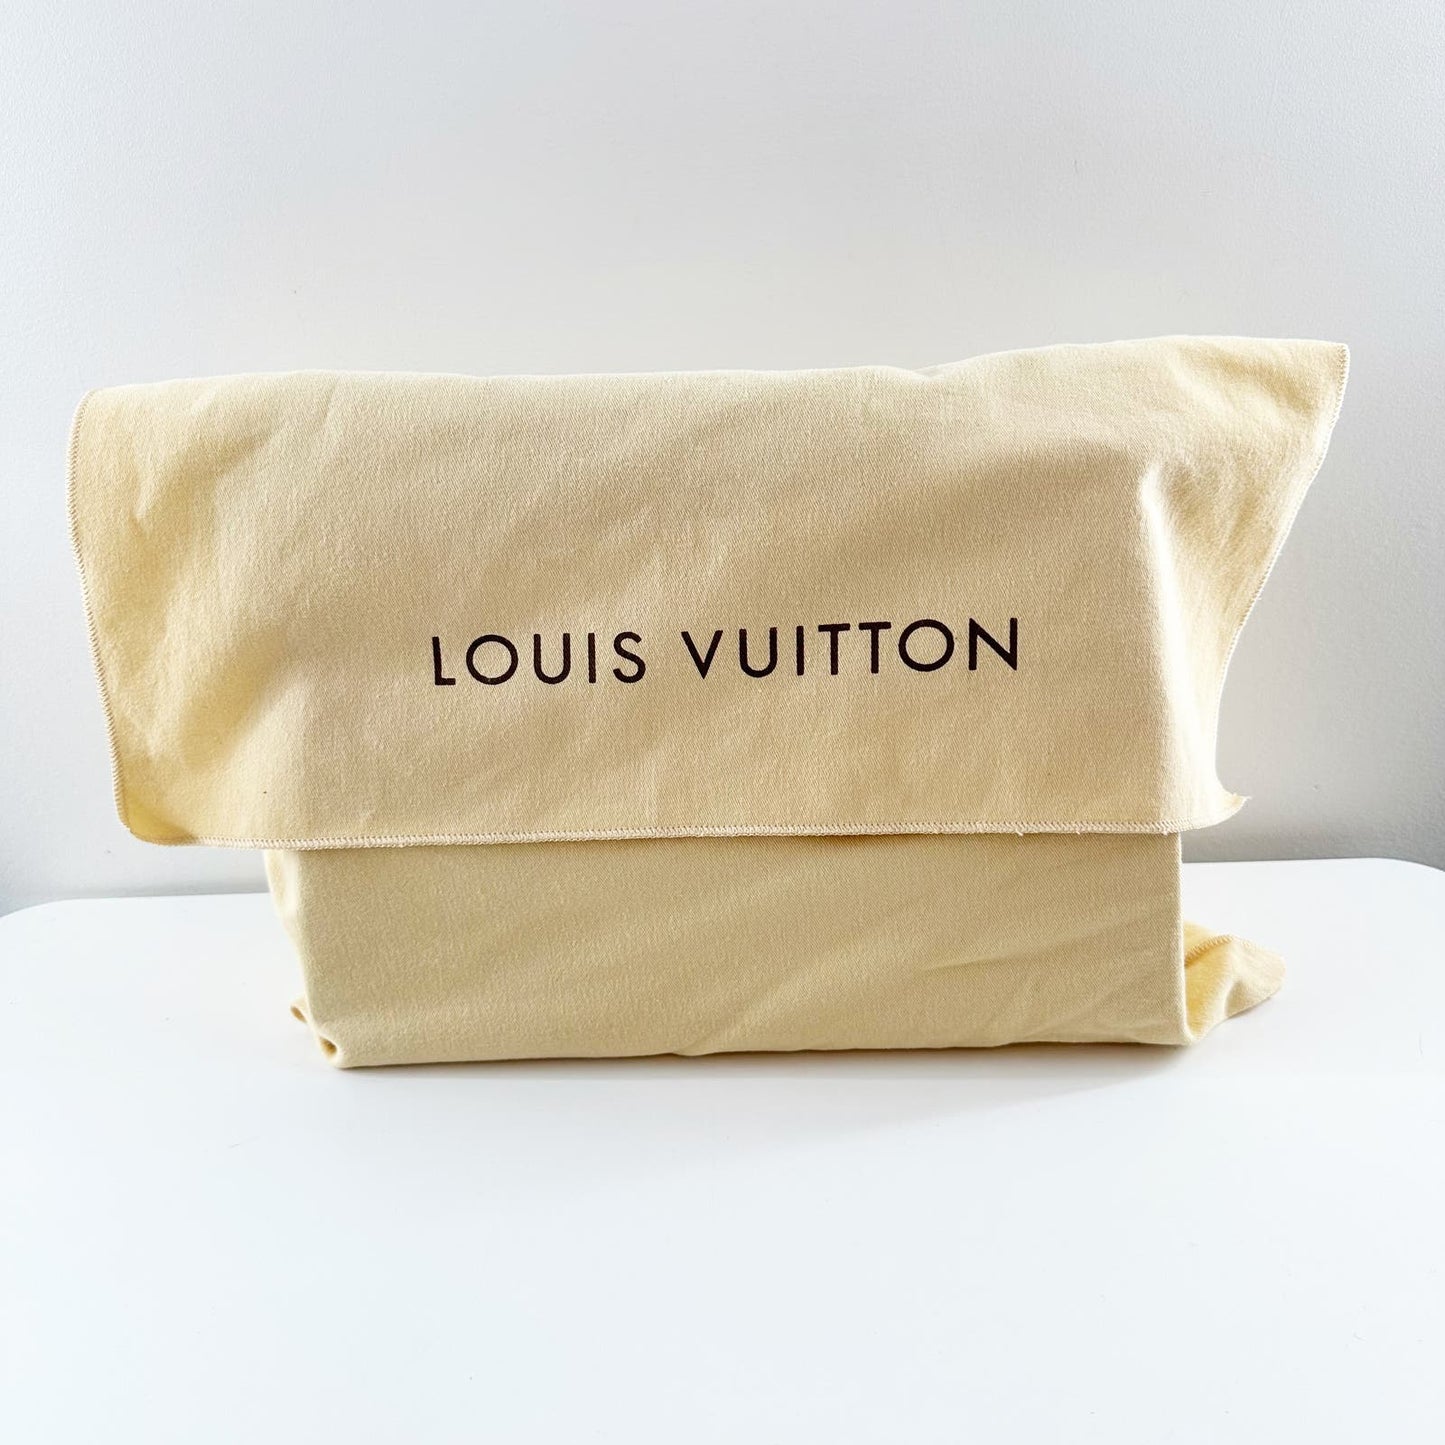 Louis Vuitton Electric Epi Leather Brea MM Bag Tote Black